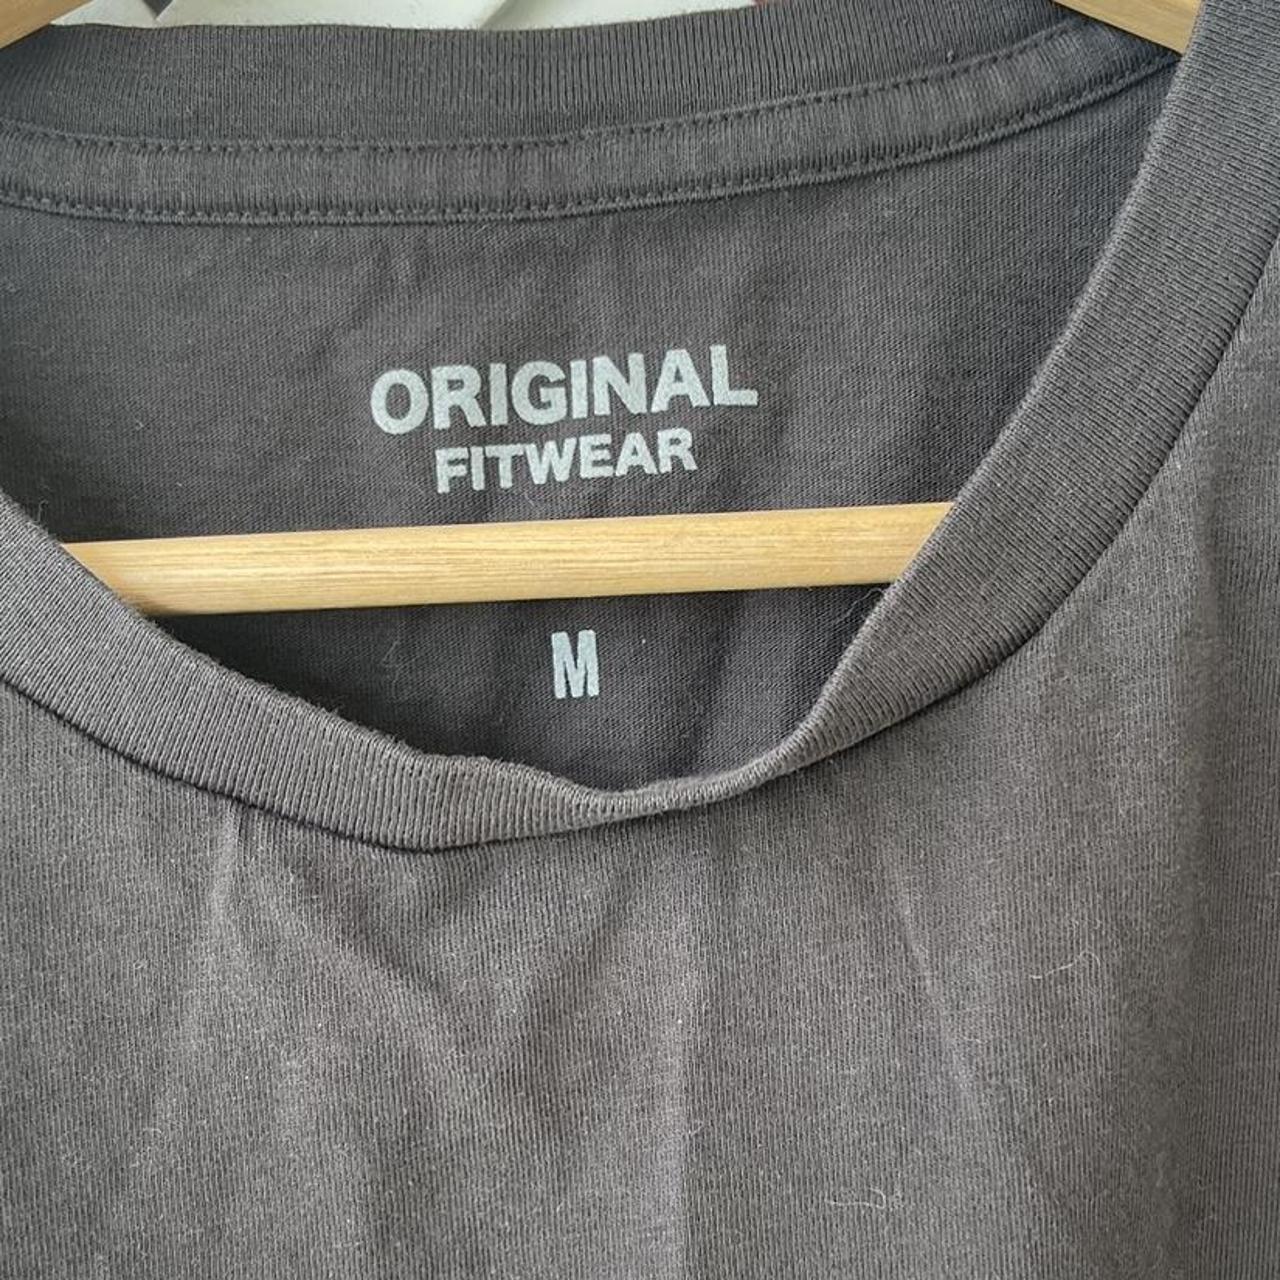 . Original fit wear - crop top Size M • prices are... - Depop